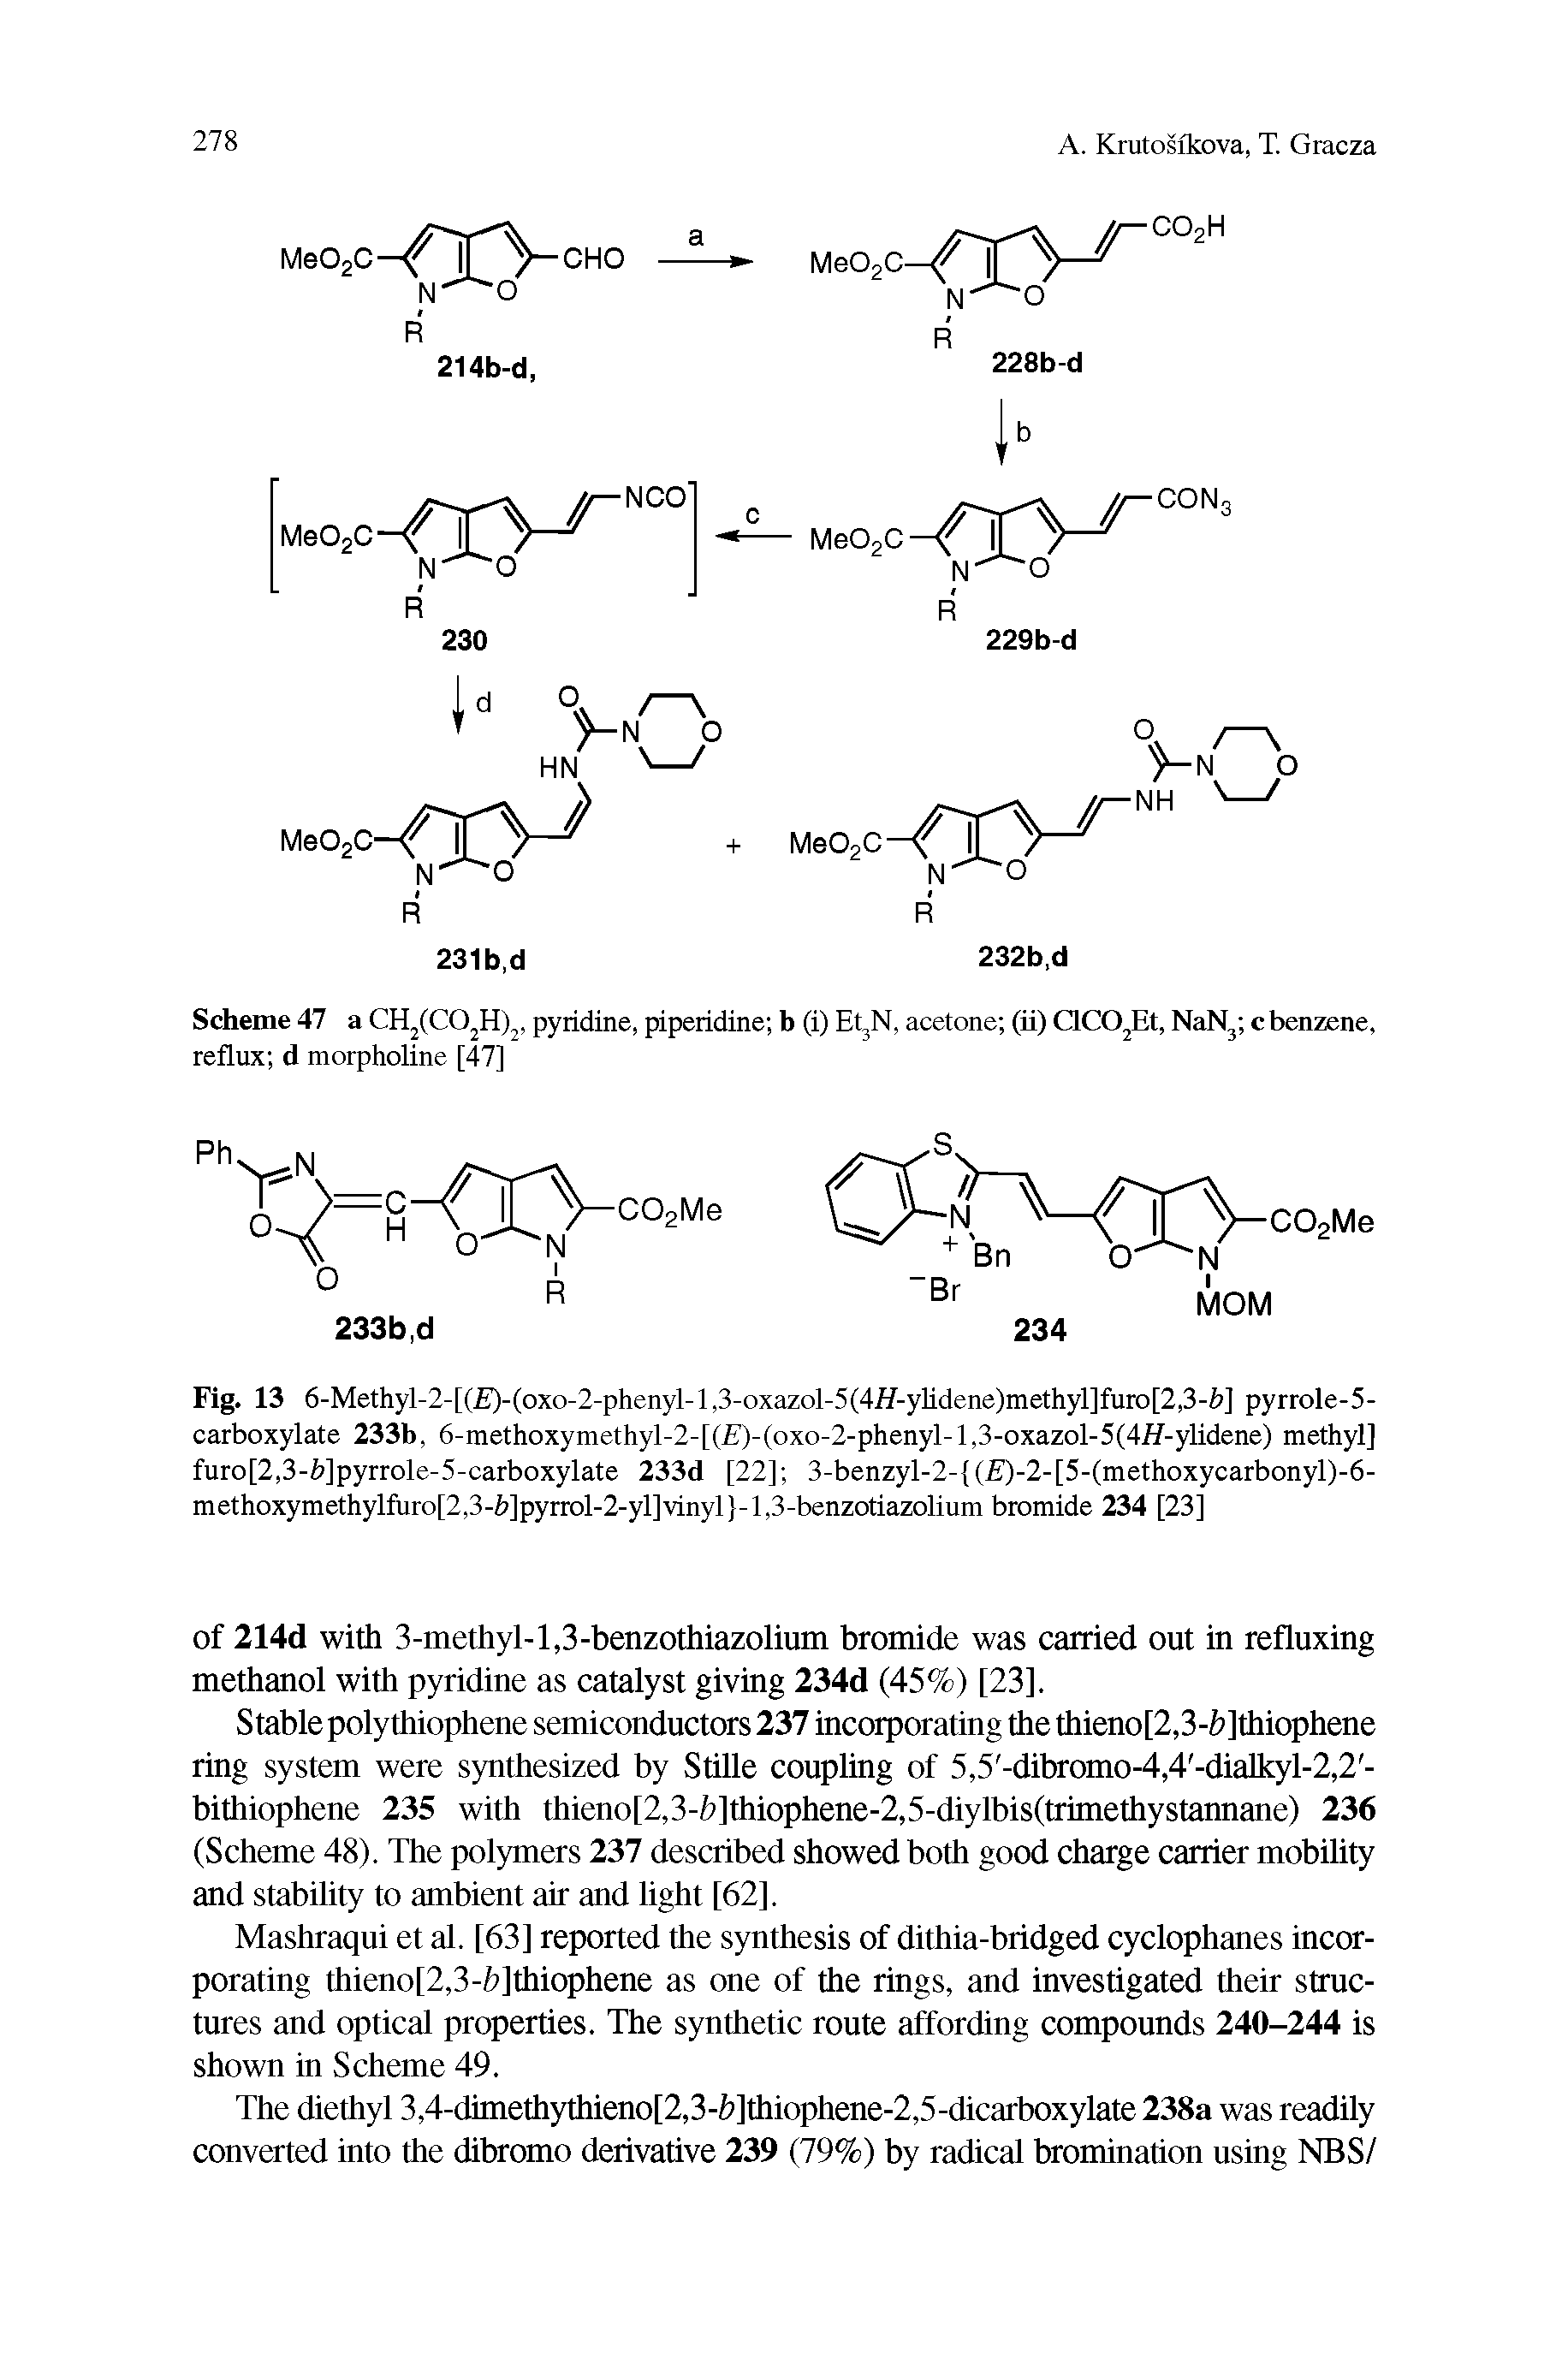 Fig. 13 6-Methyl-2-[( )-(oxo-2-phenyl-l,3-oxazol-5(47/-ylidene)methyl]furo[2,3-fc] pyrrole-5-carboxylate 233b, 6-methoxymethyl-2-[( )-(oxo-2-phenyl-l,3-oxazol-5(4//-ylidene) methyl] furo[2,3-fc]pyrrole-5-carboxylate 233d [22] 3-benzyl-2-[( )-2-[5-(methoxycarbonyl)-6-methoxymethylfuro[2,3-fe]pyrrol-2-yl]vinyl -l,3-benzotiazolium bromide 234 [23]...